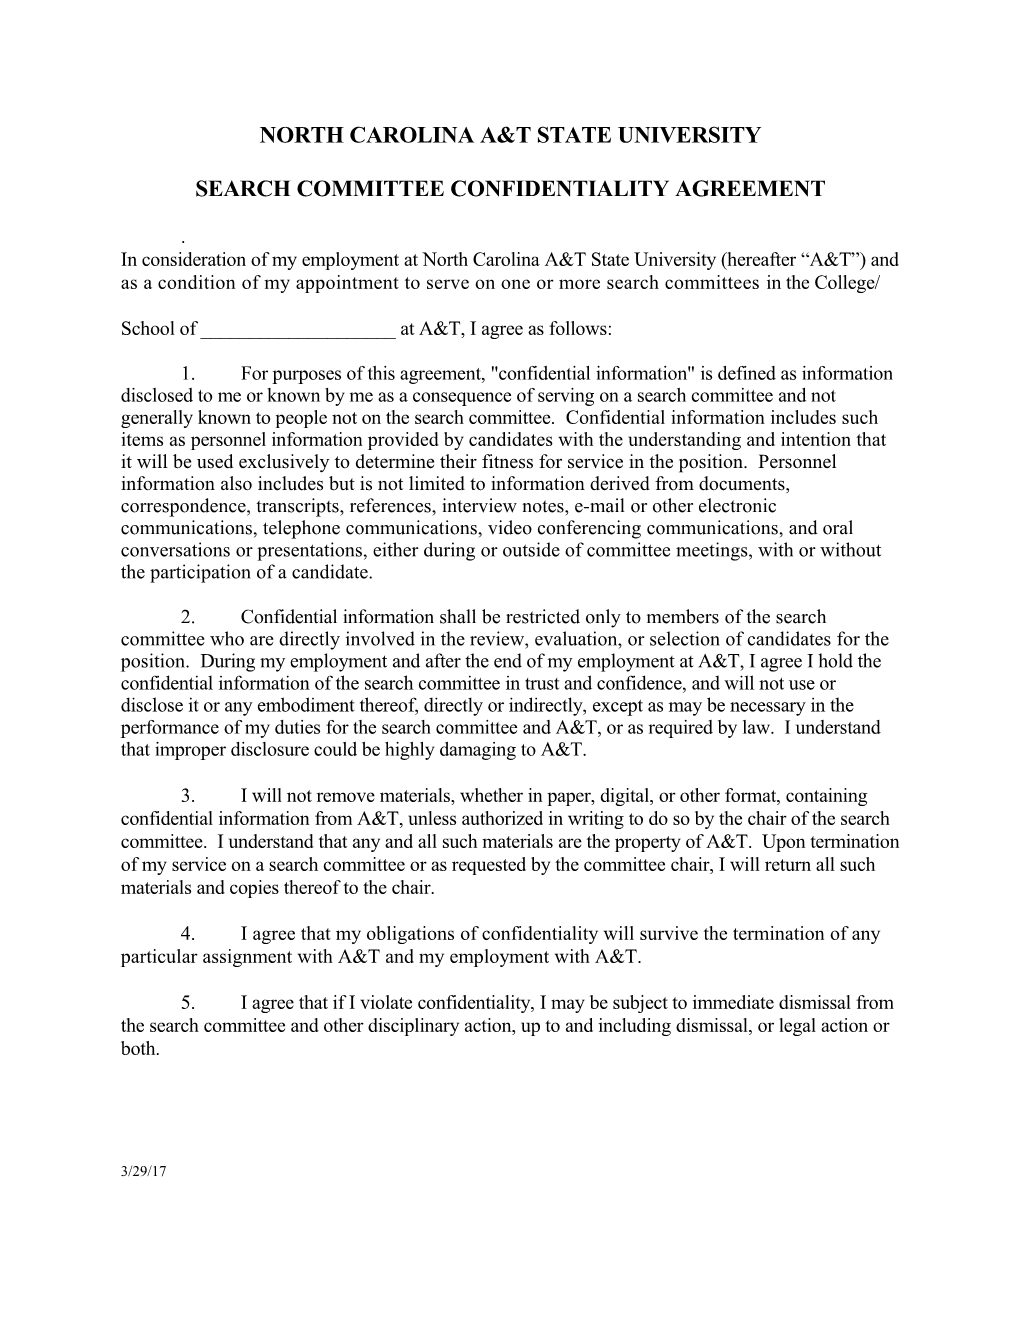 Employee Confidentiality Agreement